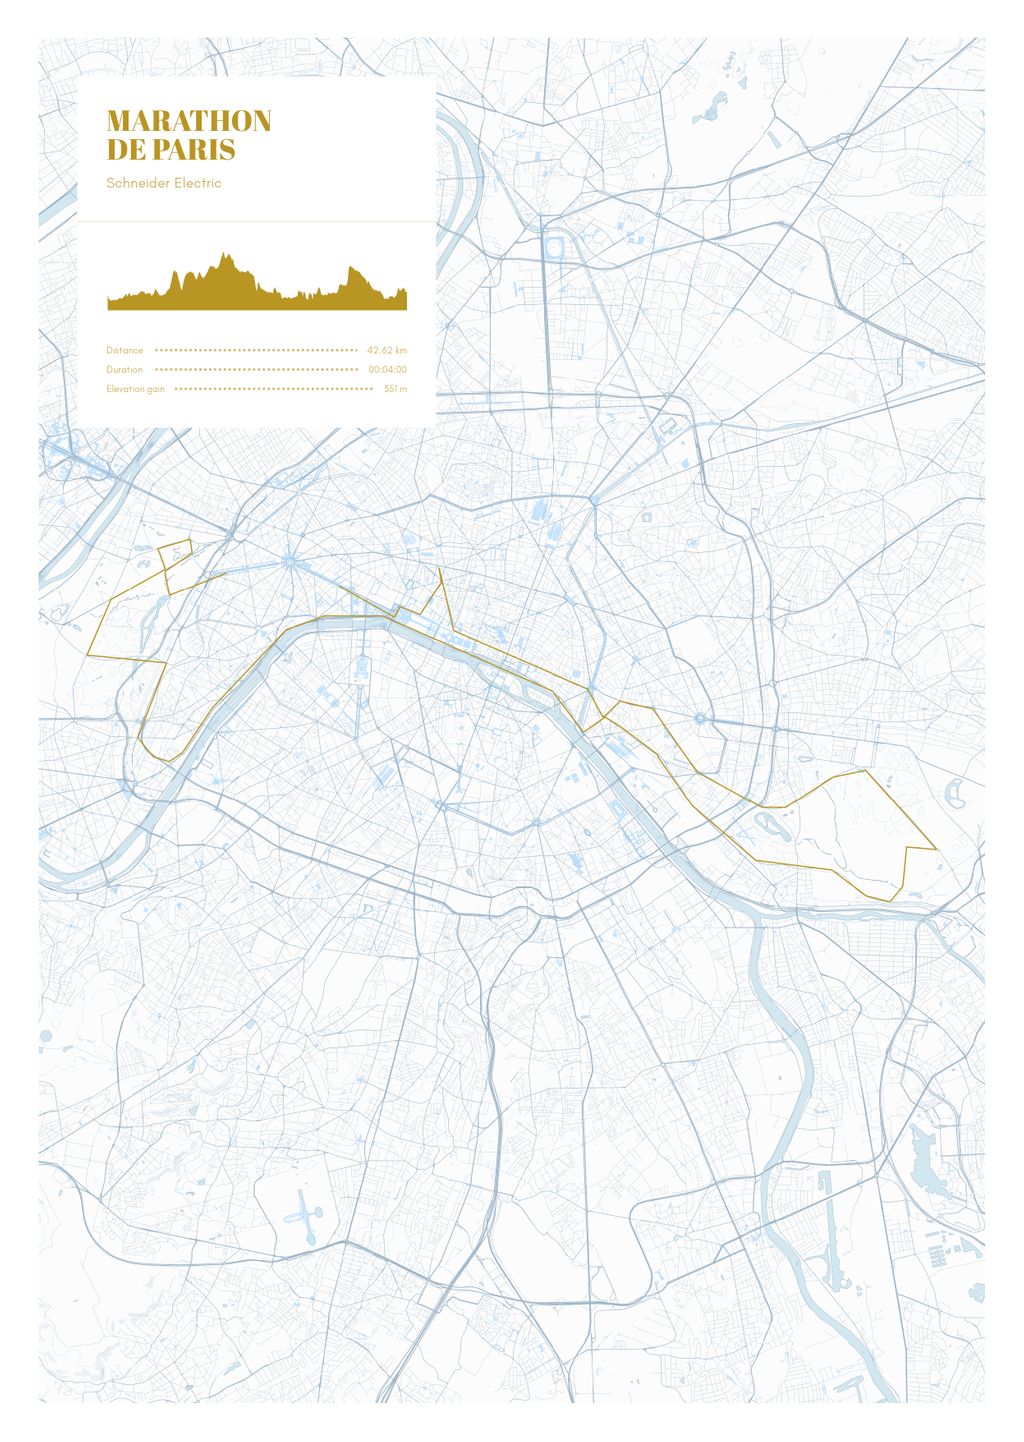 Póster con un mapa de Marathon 
de Paris